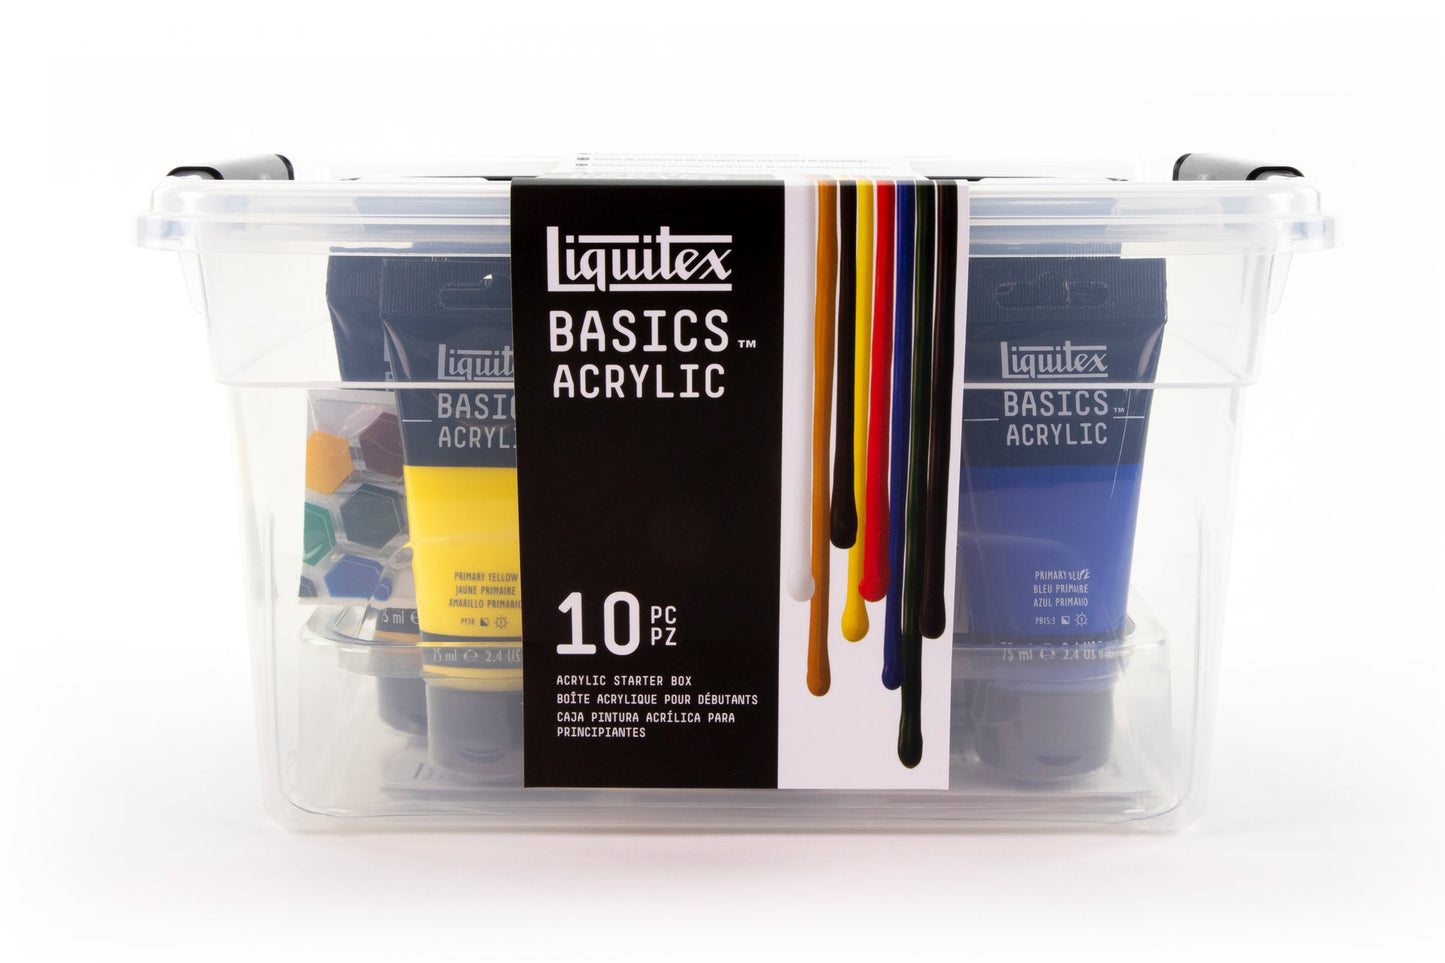 Basics Acrylic - Acrylic Starter Box